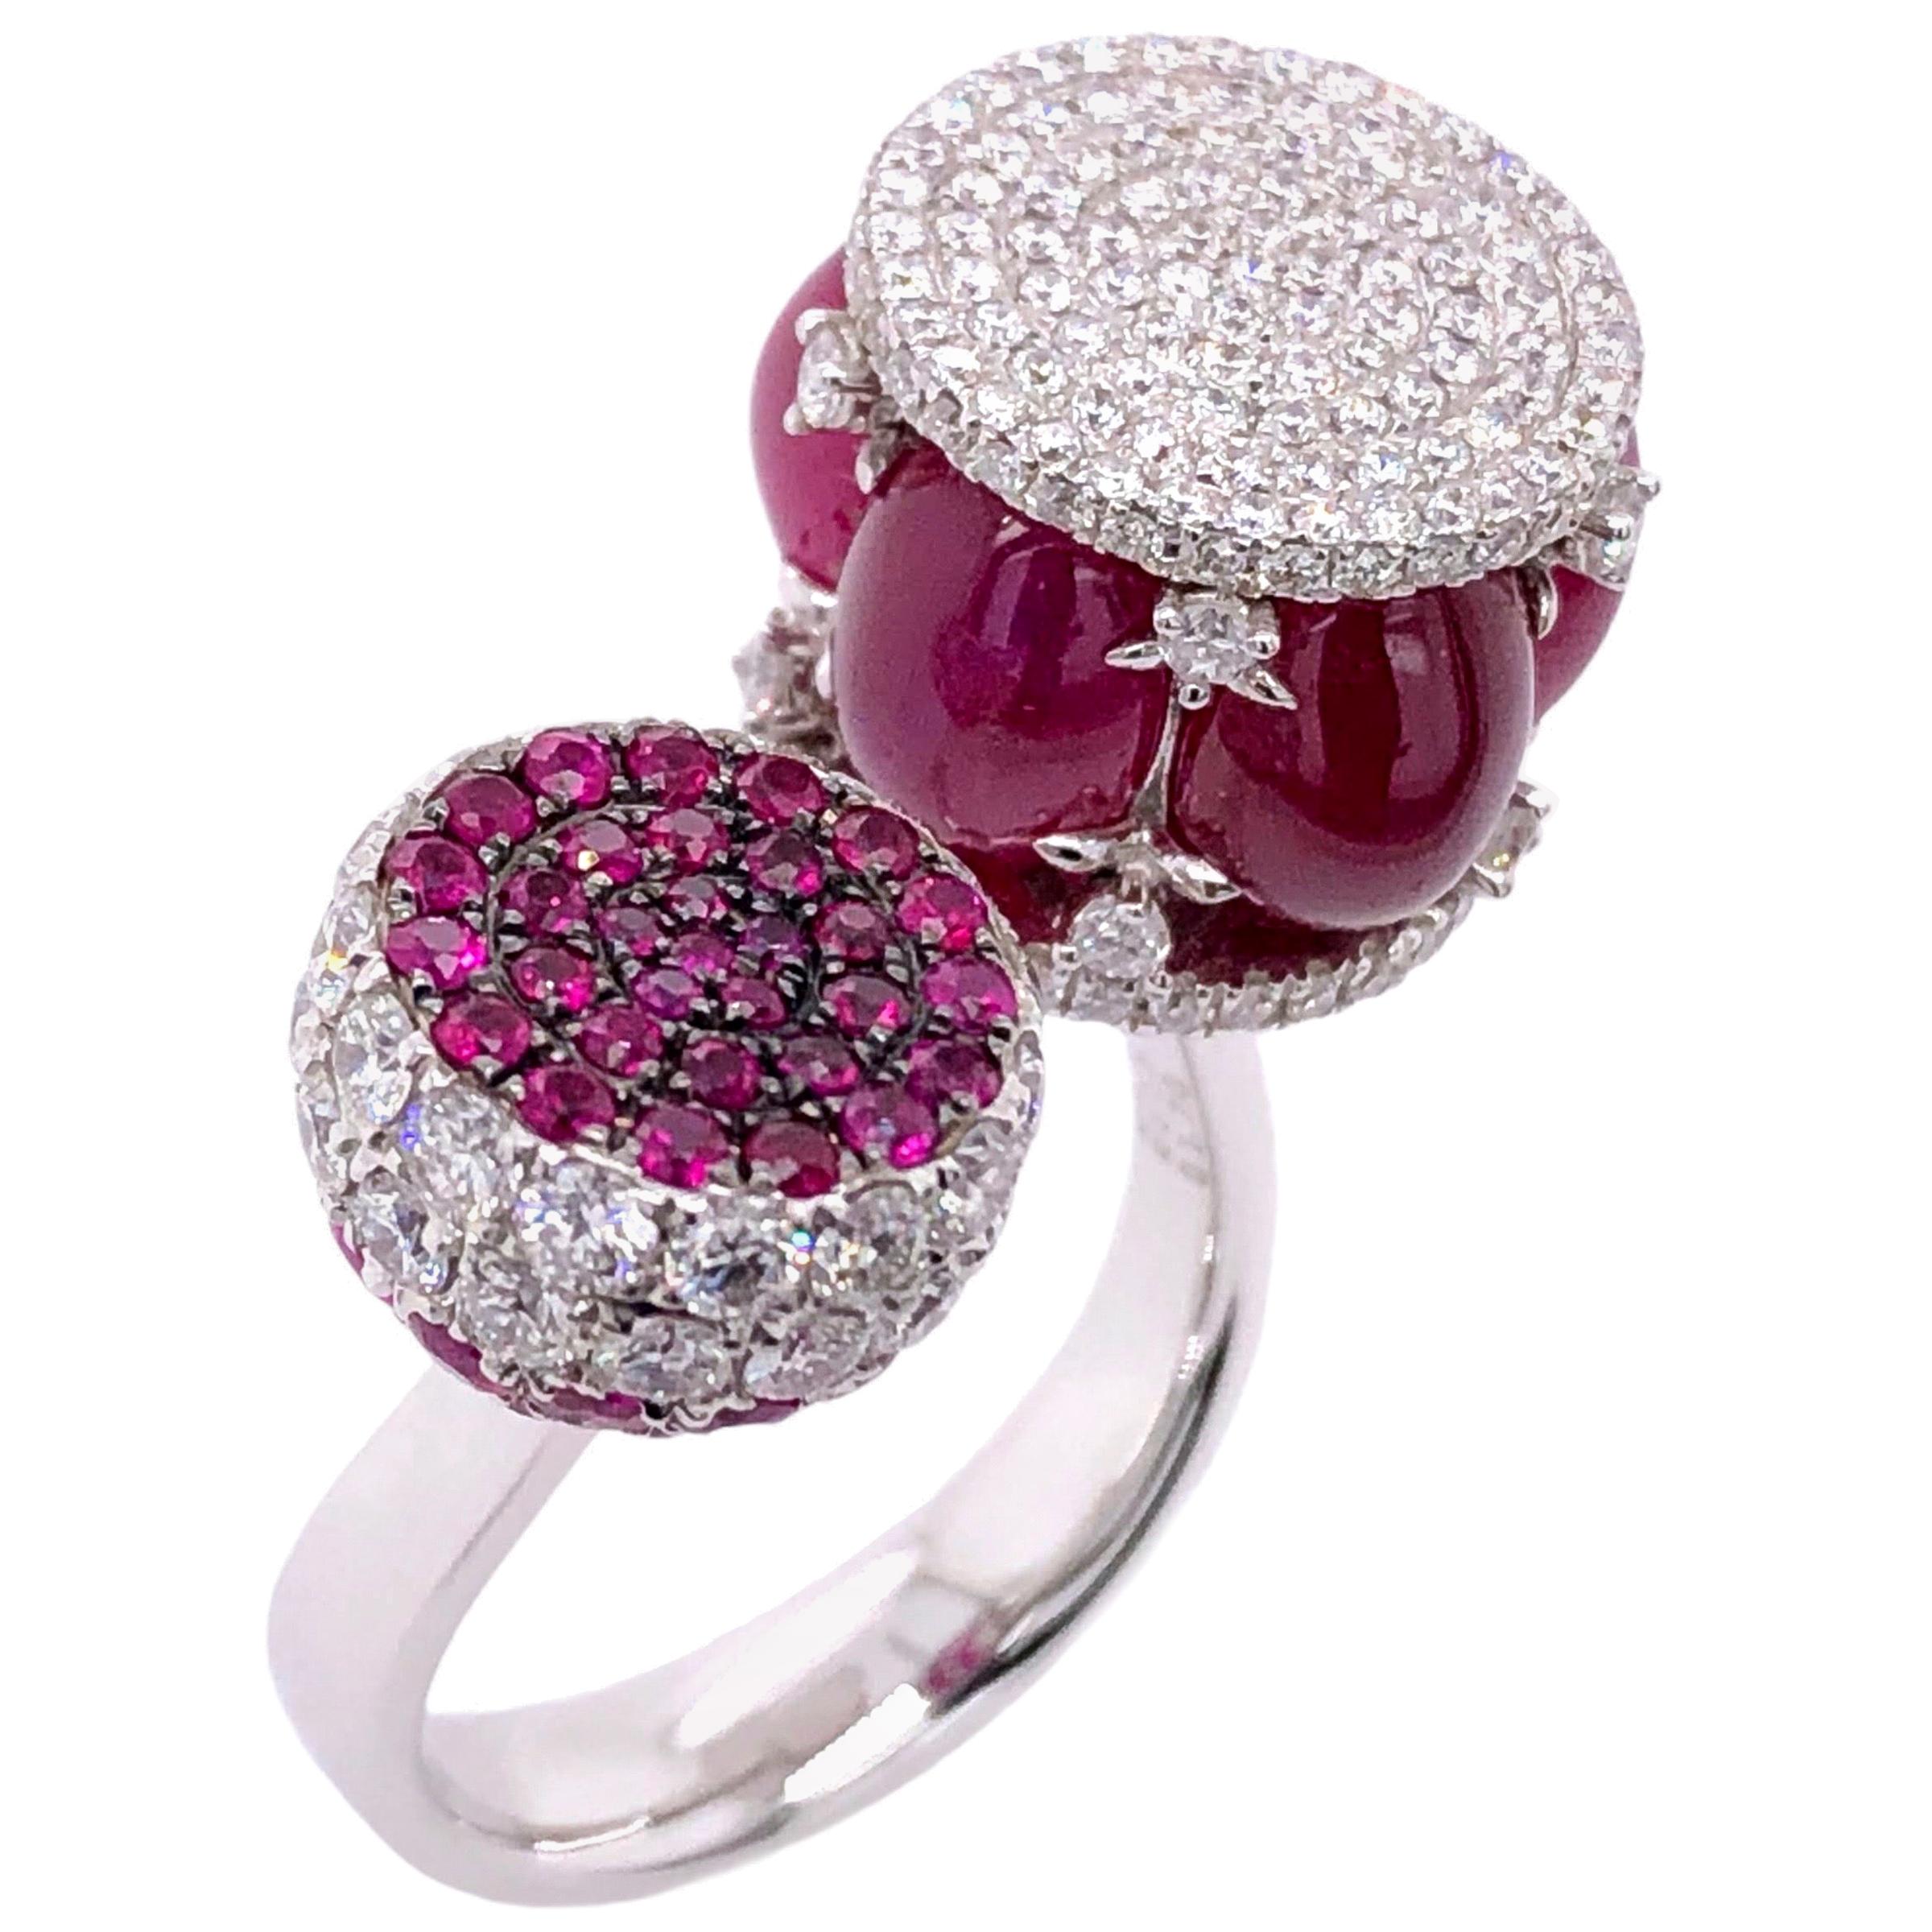 Paris Craft House 9.33 Carat Cabochon Ruby Diamond Ring in 18 Karat White Gold For Sale